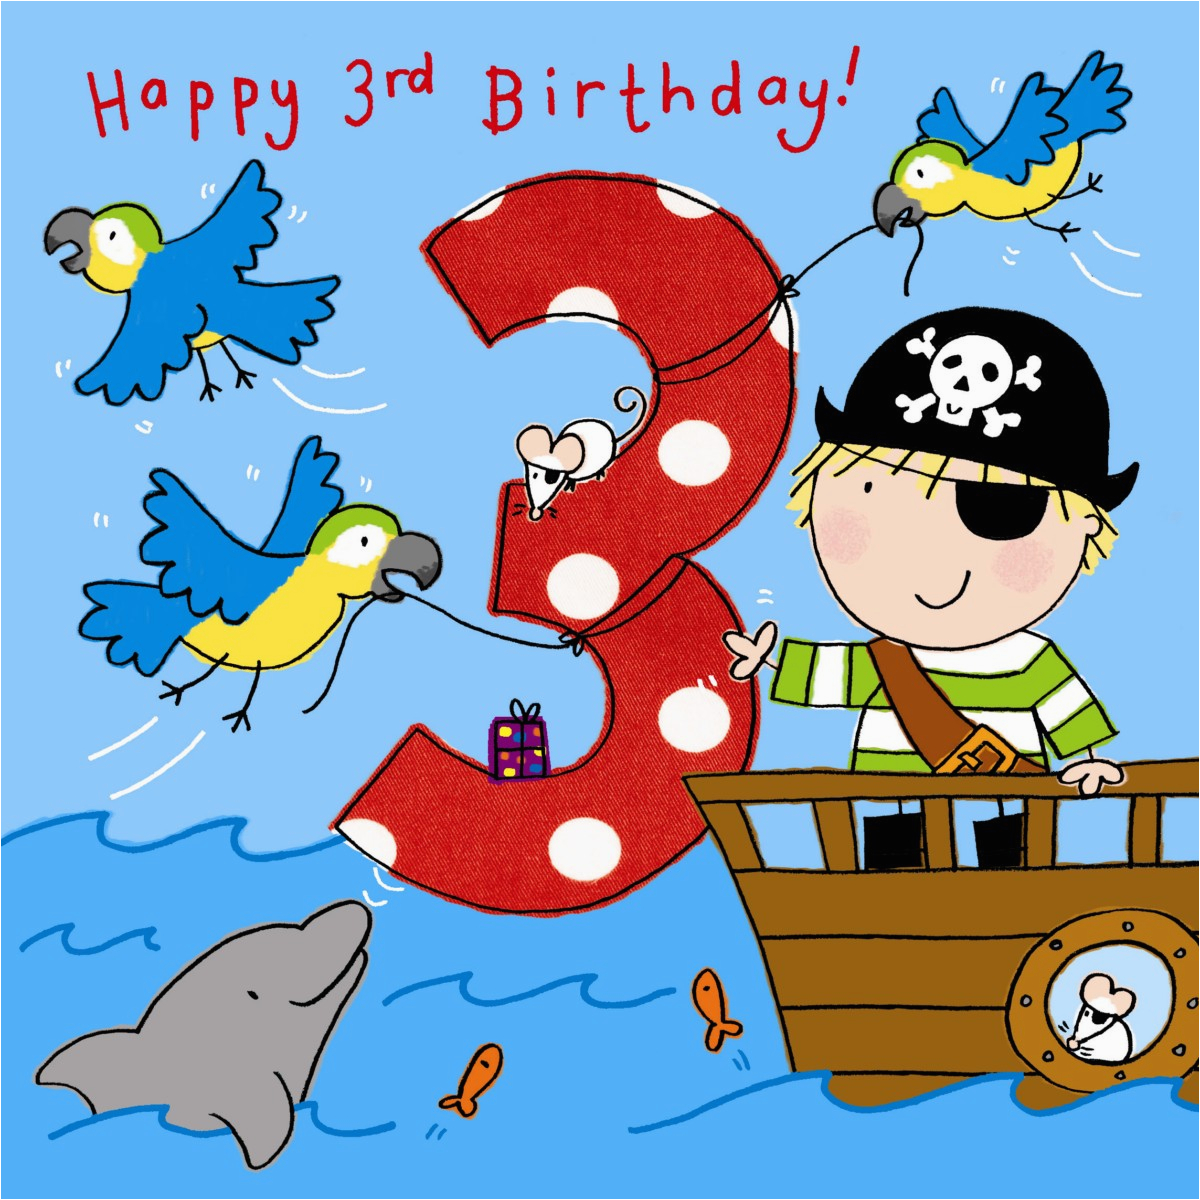 age 3 boys pirate birthday card 1038 p